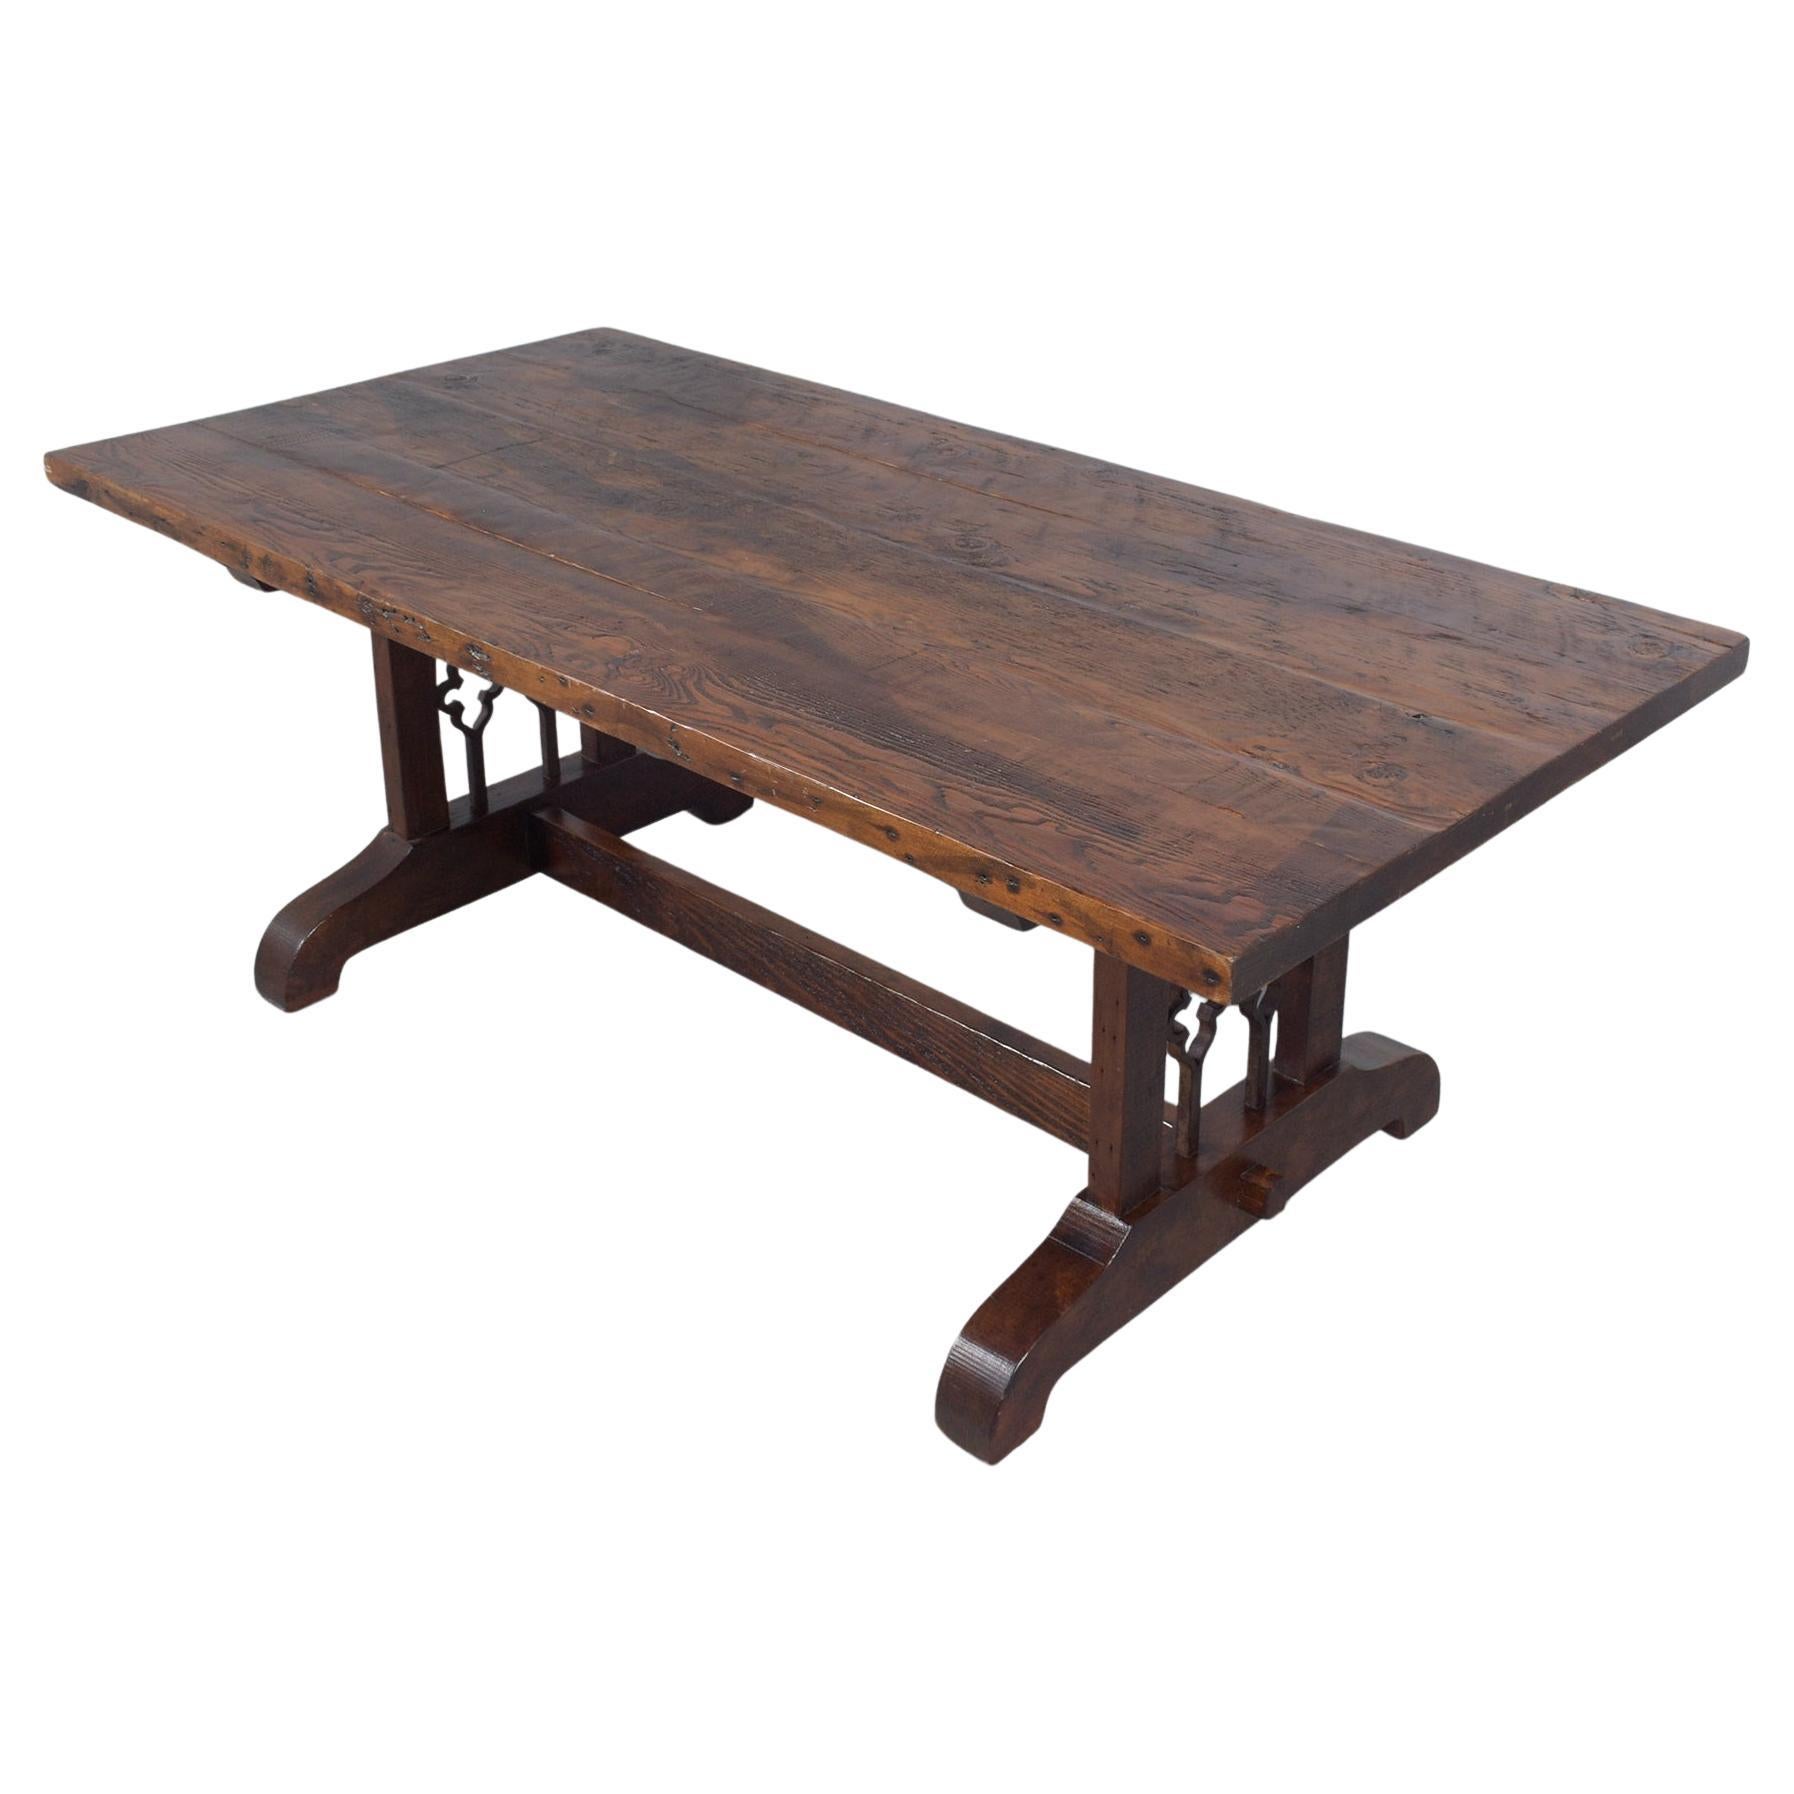 Vintage Solid Wood Dining Table: Classic Craftsmanship Meets Modern Elegance